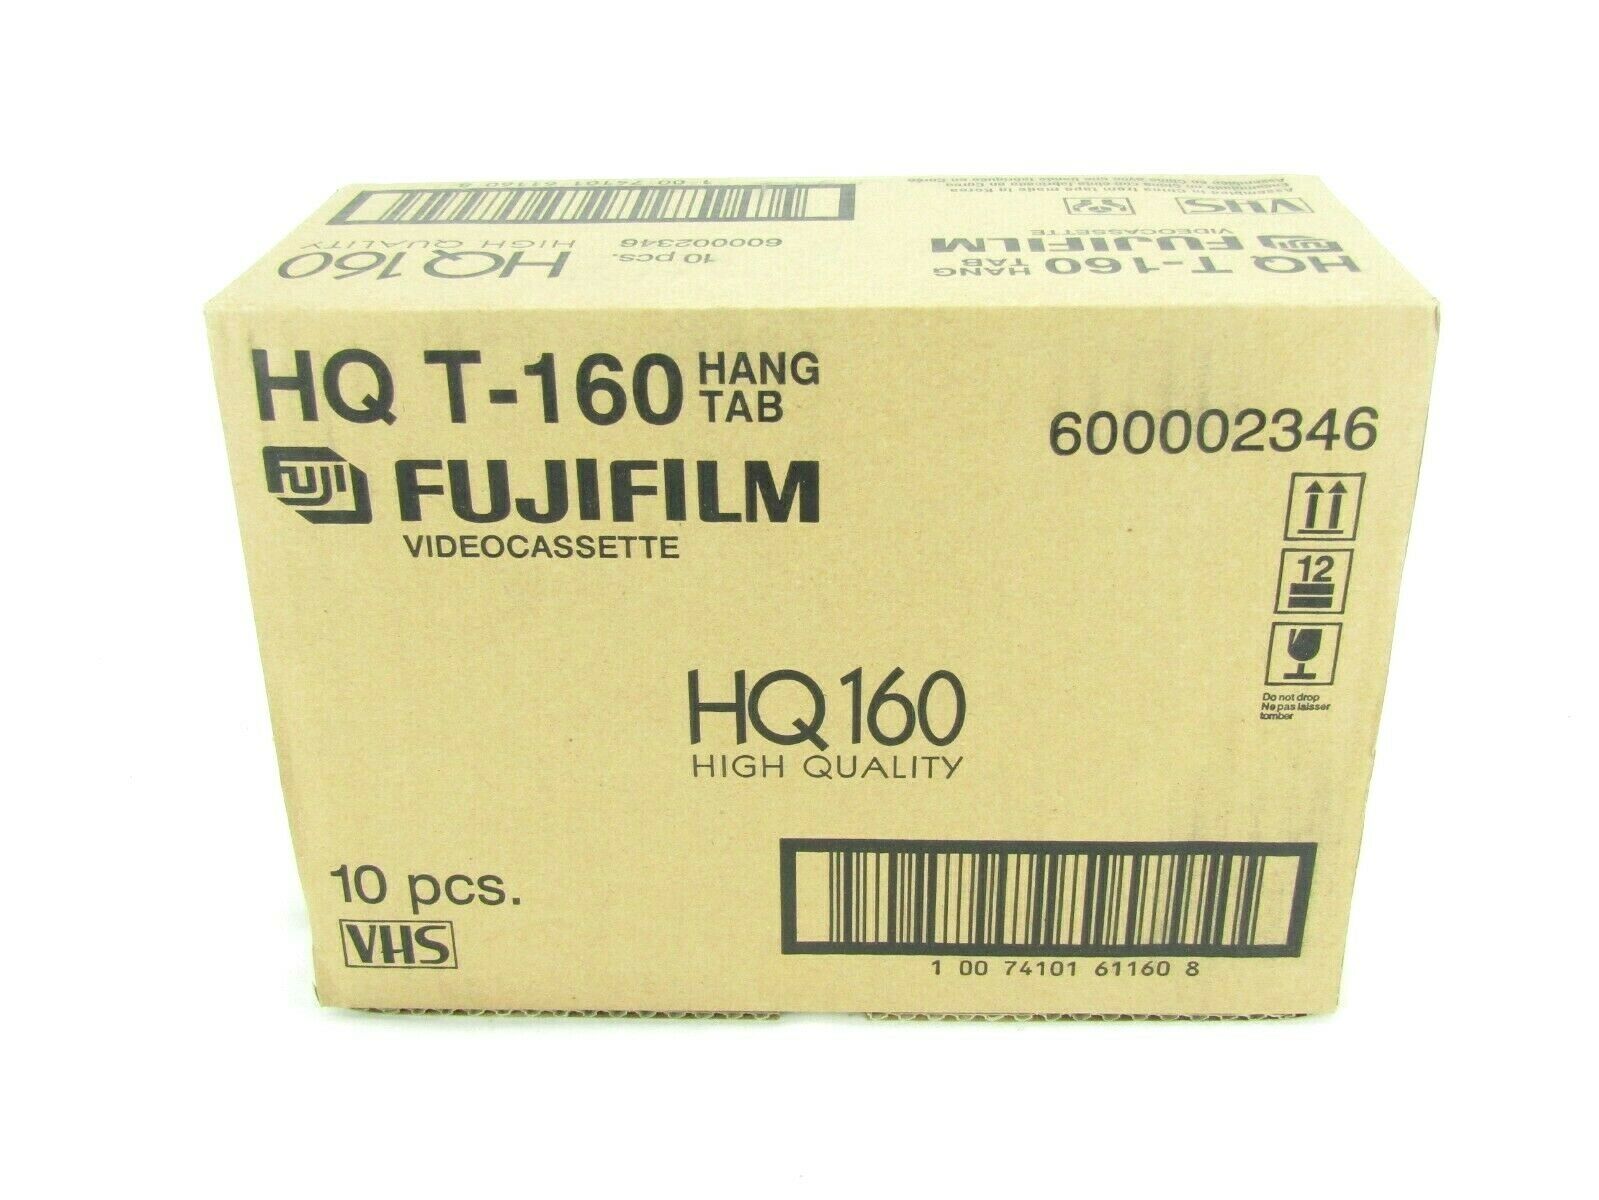 Fuji Fujifilm High Quality Vhs Videocassettes - Hq T-160 - 8 Hour - Case Of 10